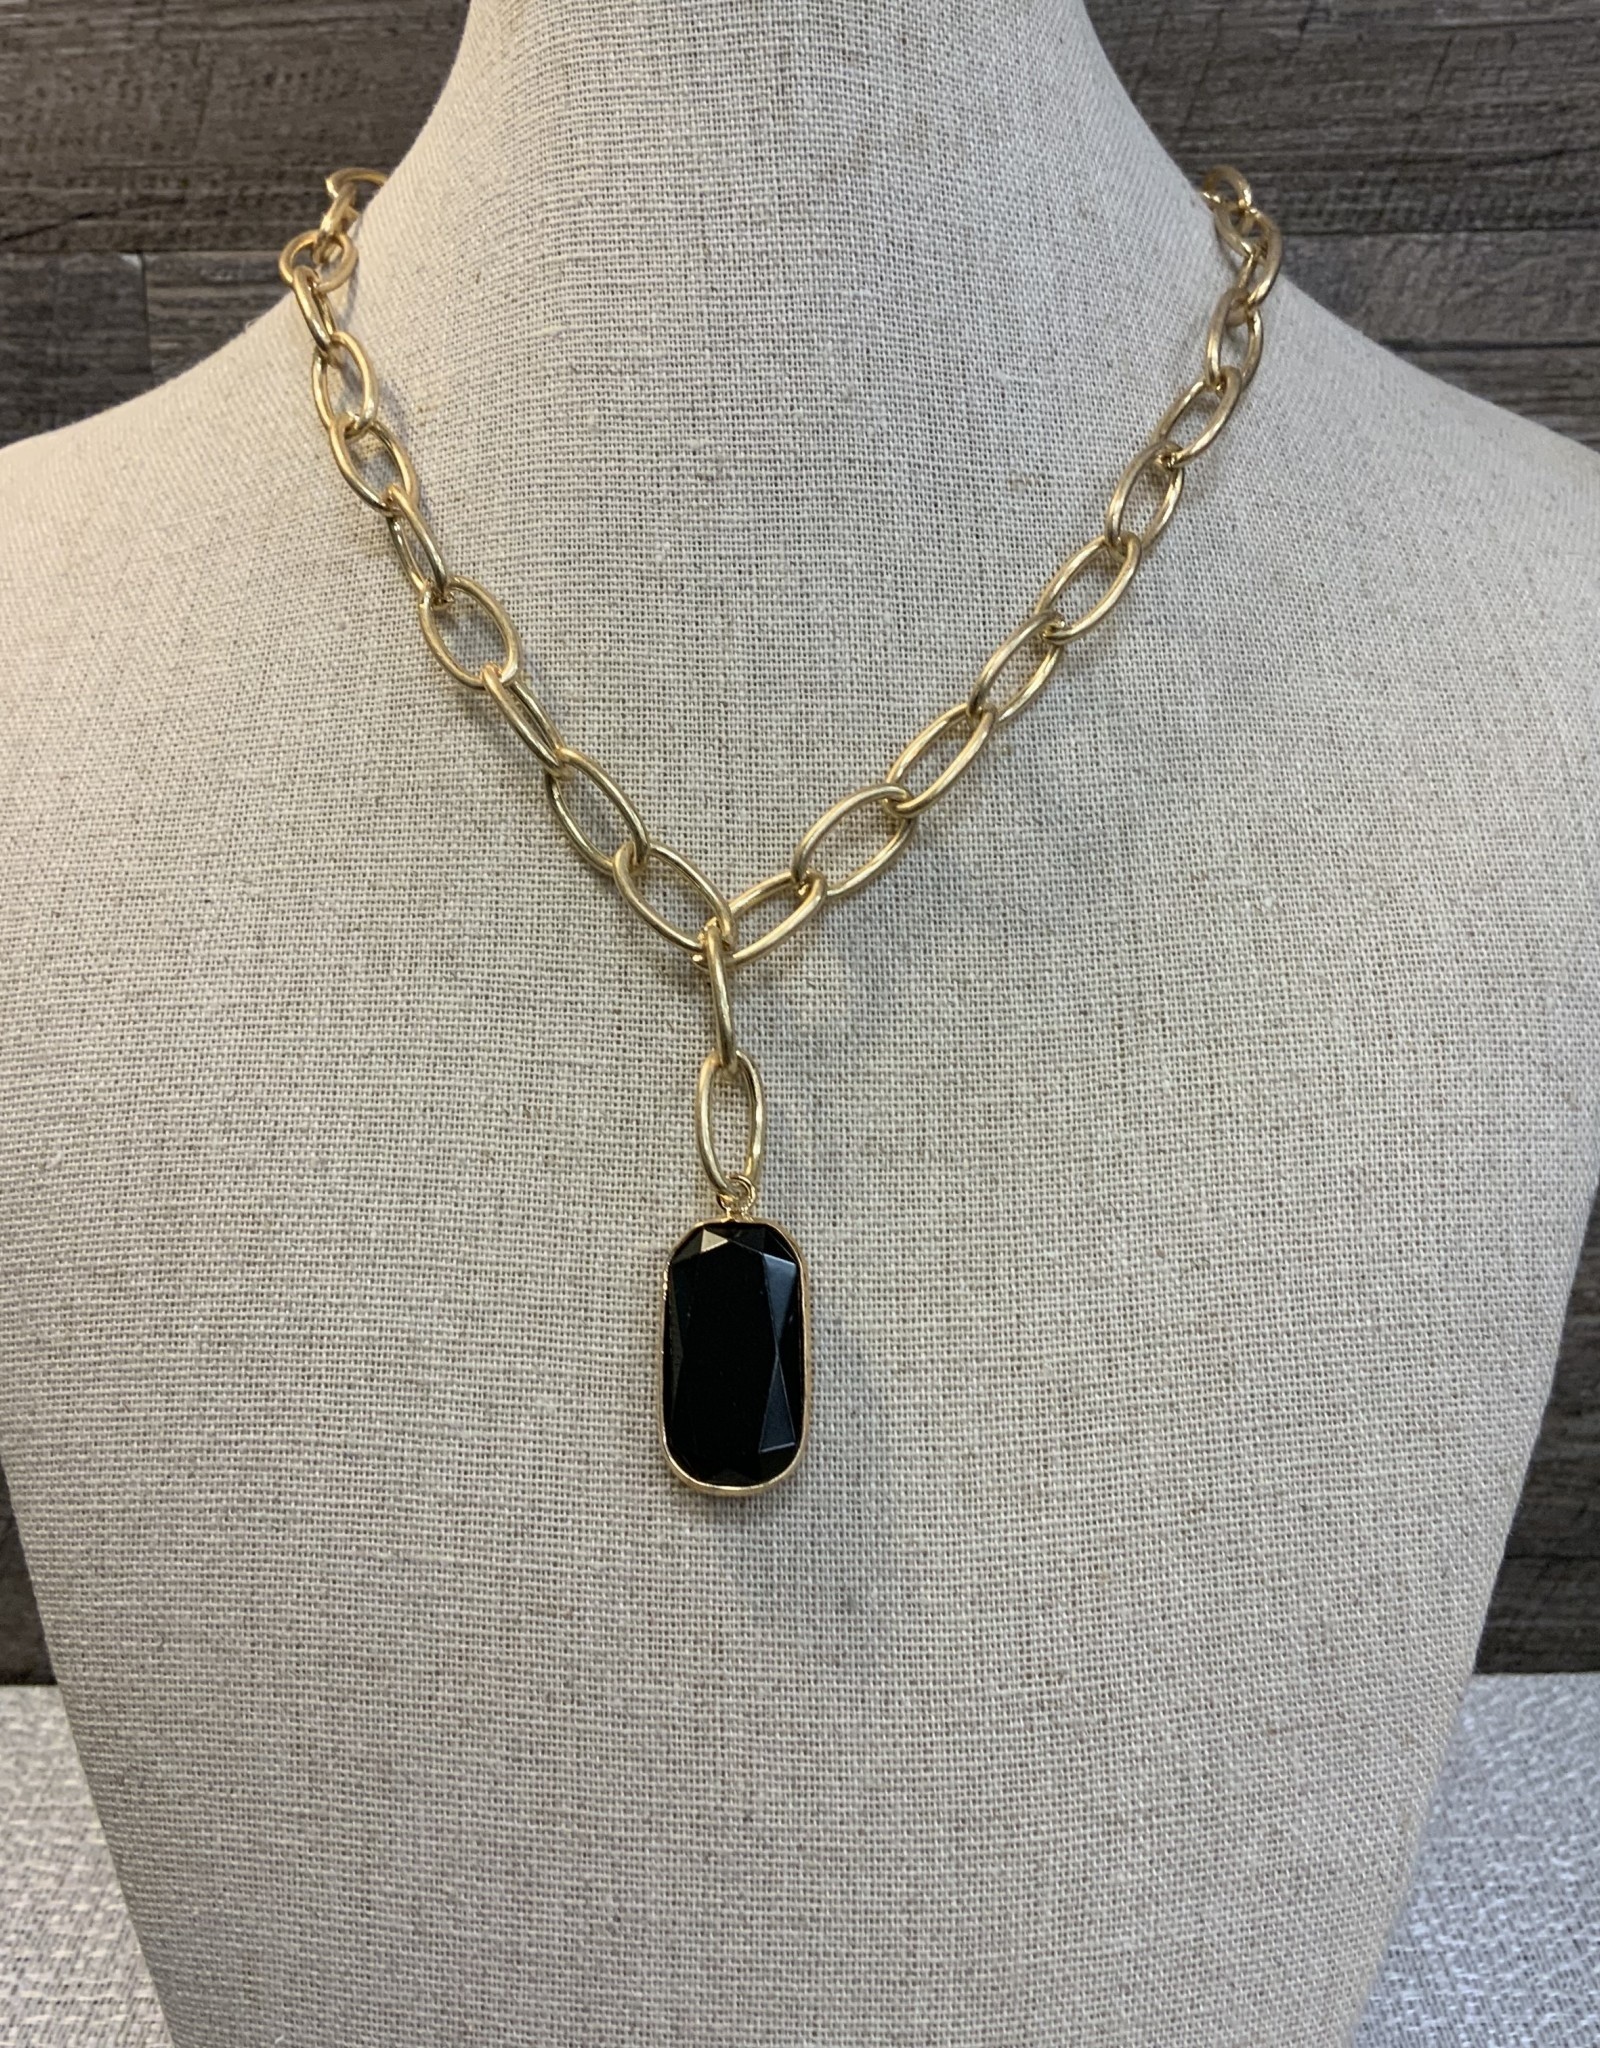 Gold Chain w/Onyx Stone Pendant Necklace